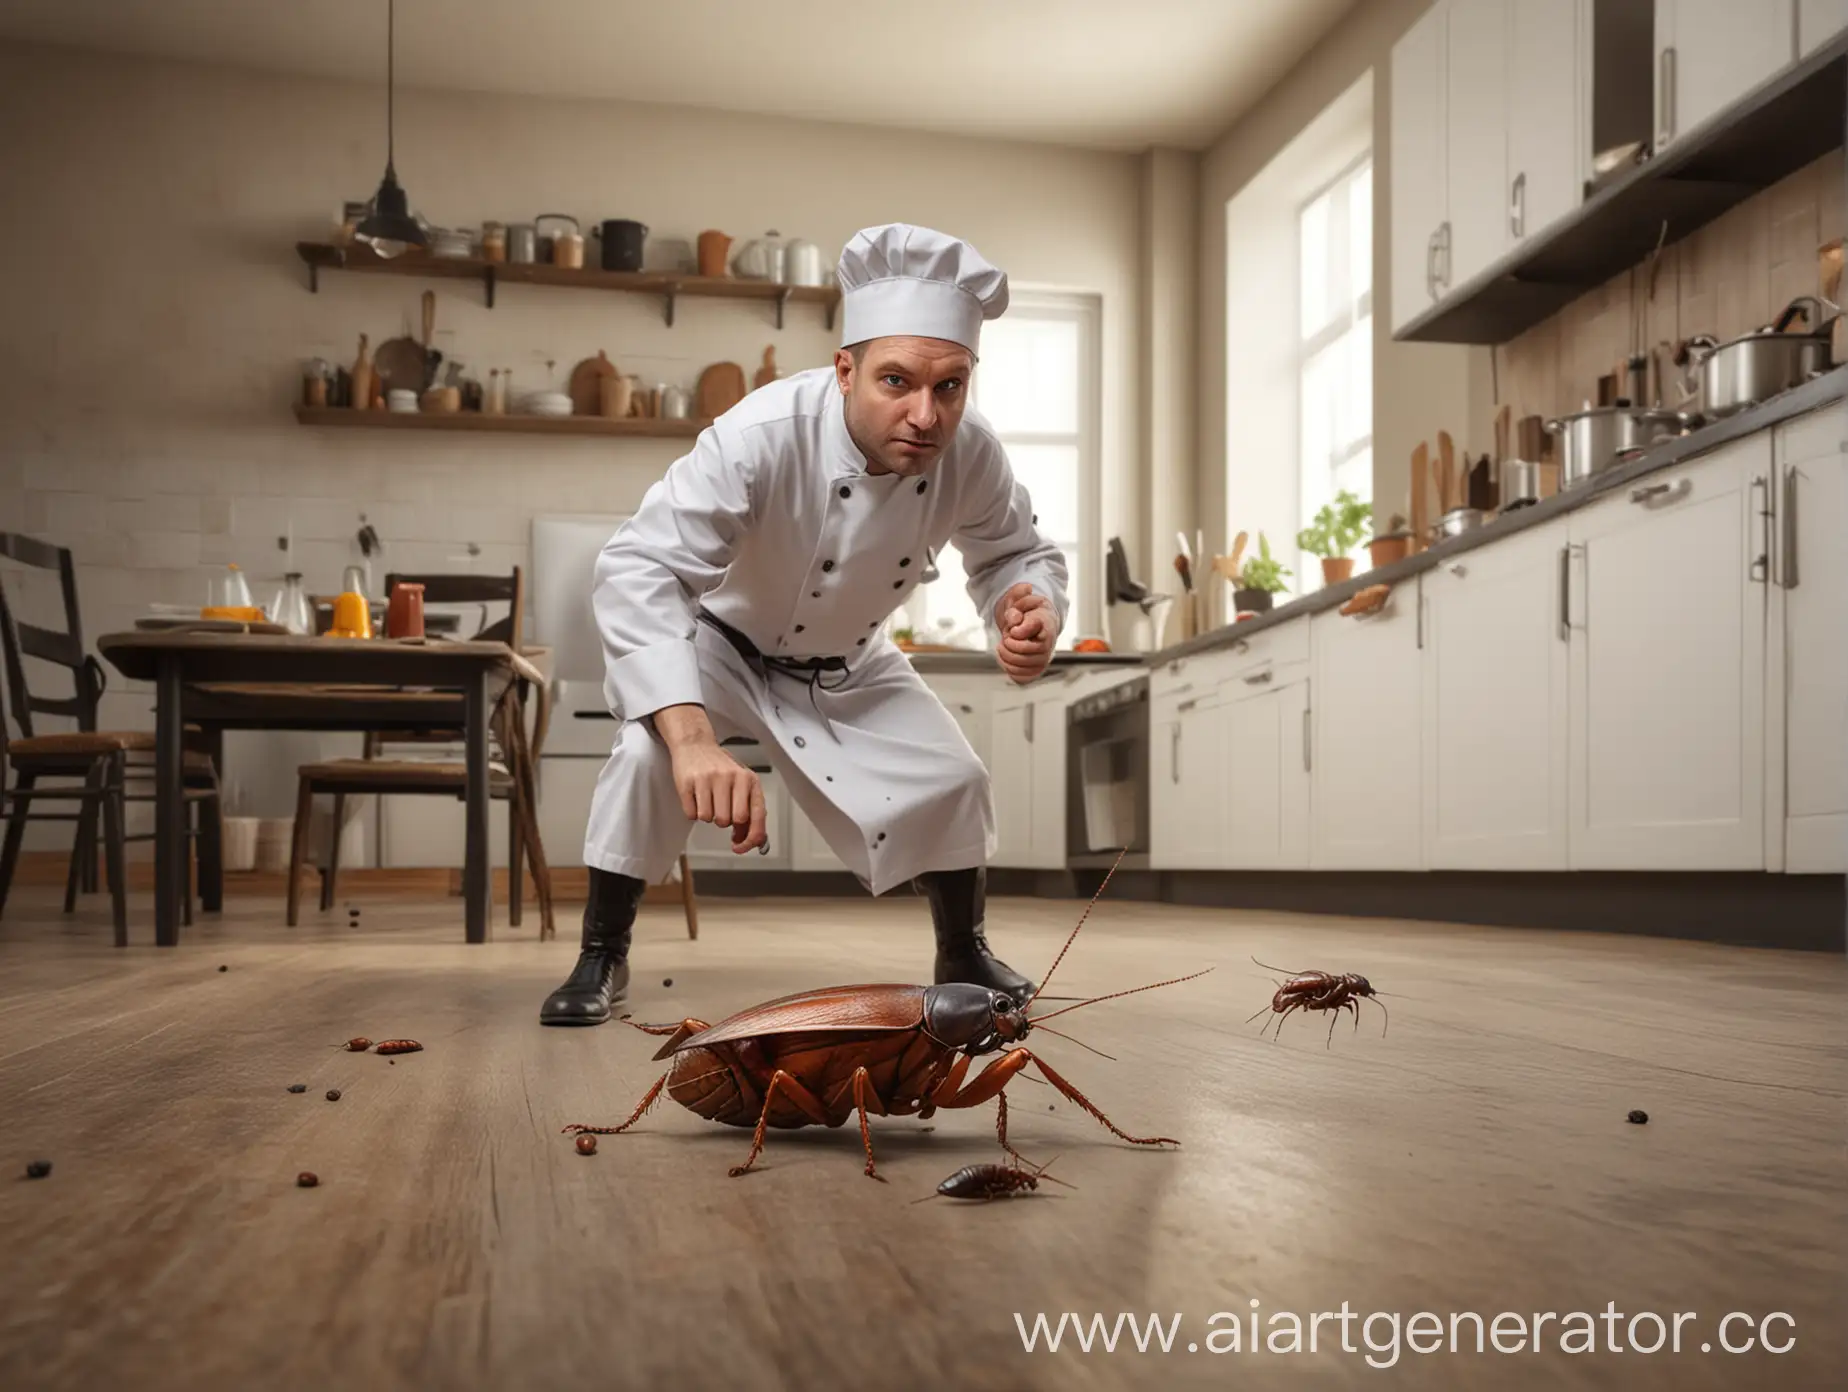 Intense-Kitchen-Battle-HumanSized-Cockroach-vs-Chef-in-Photorealistic-Scene